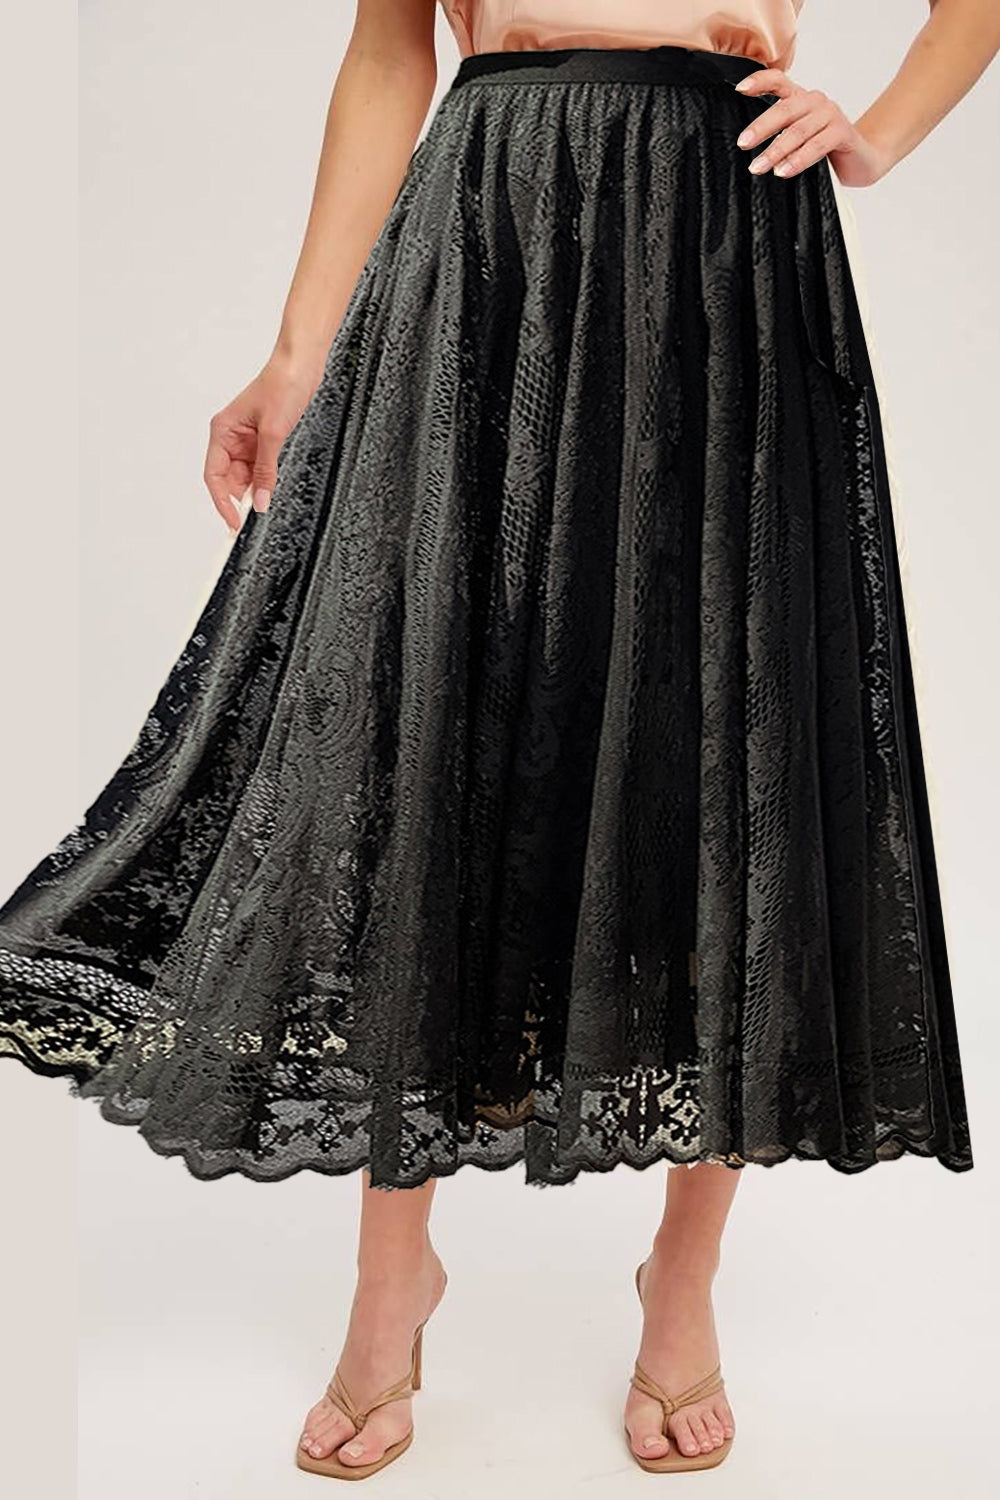 Lace High Waist Midi Skirt Black S 